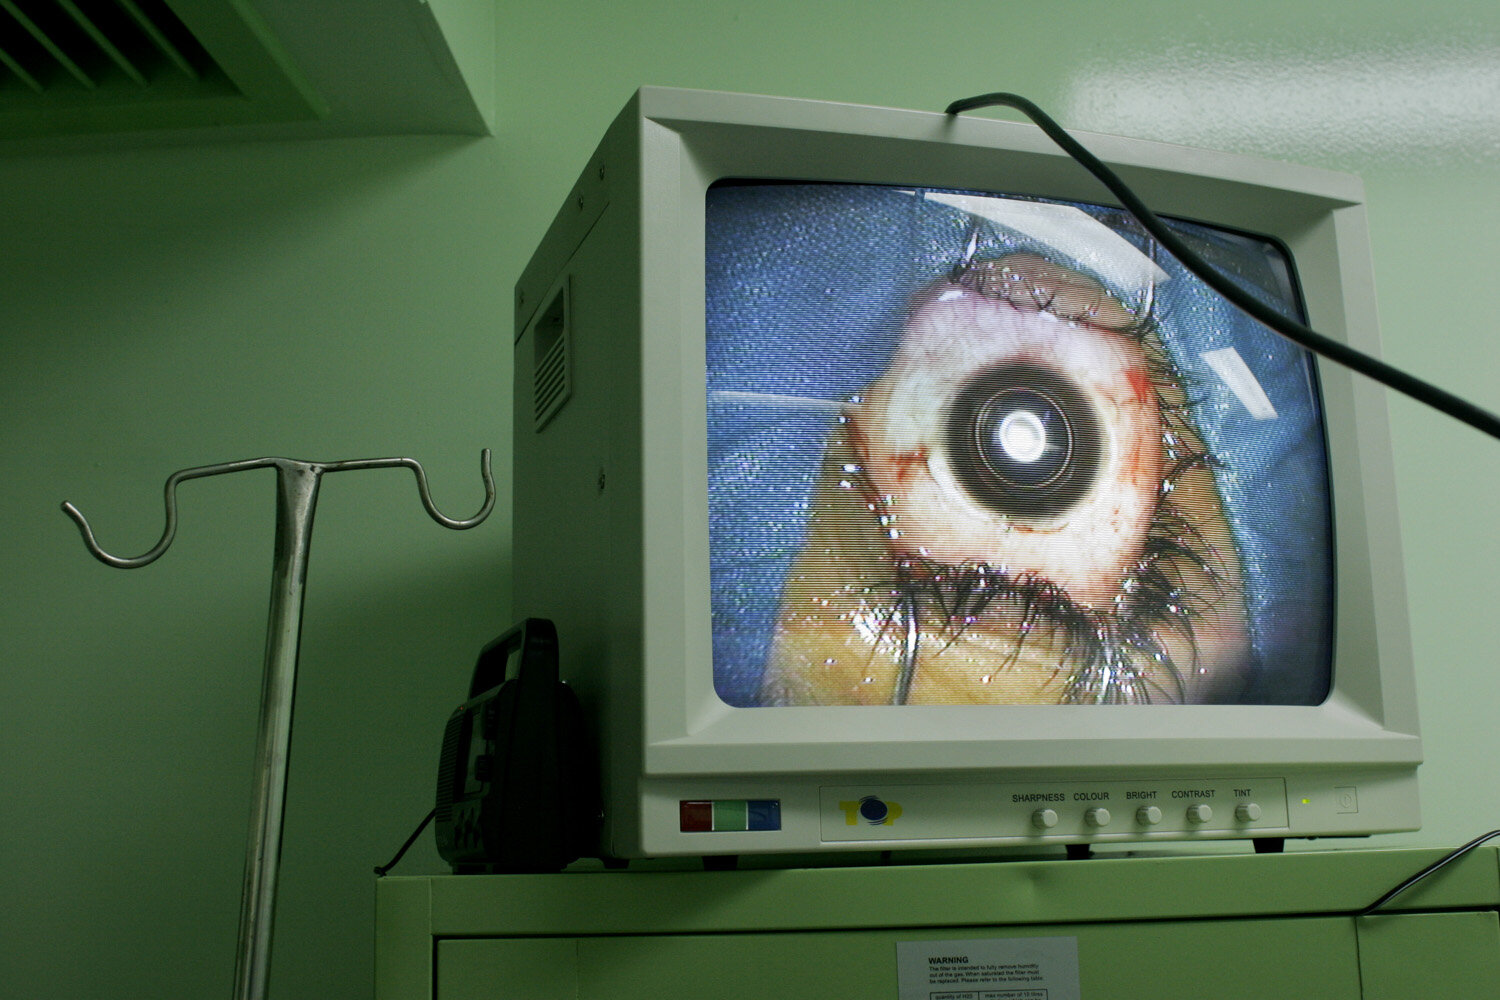  Live eye surgery on a monitor in the Pando ferrer eye clinic in Havana. 